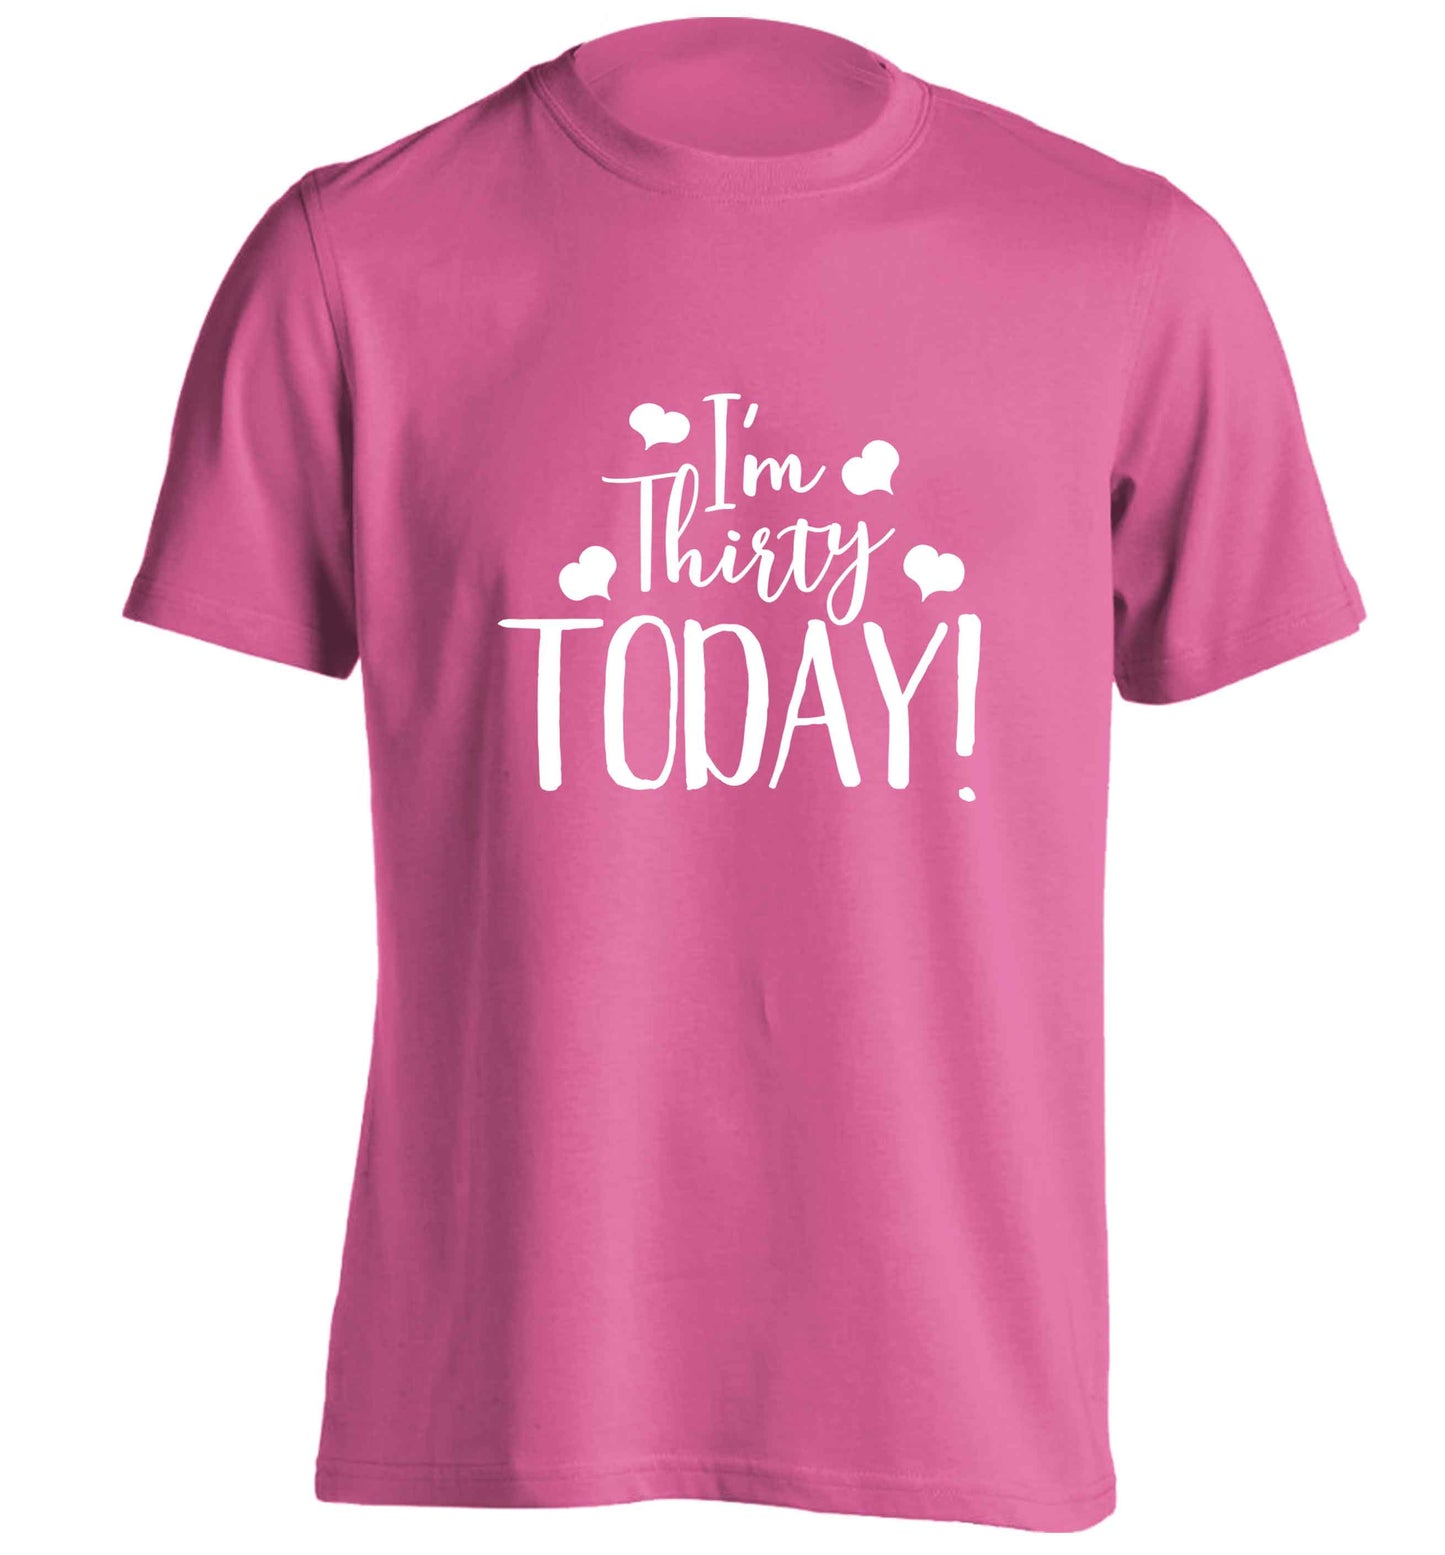 I'm thirty today! adults unisex pink Tshirt 2XL